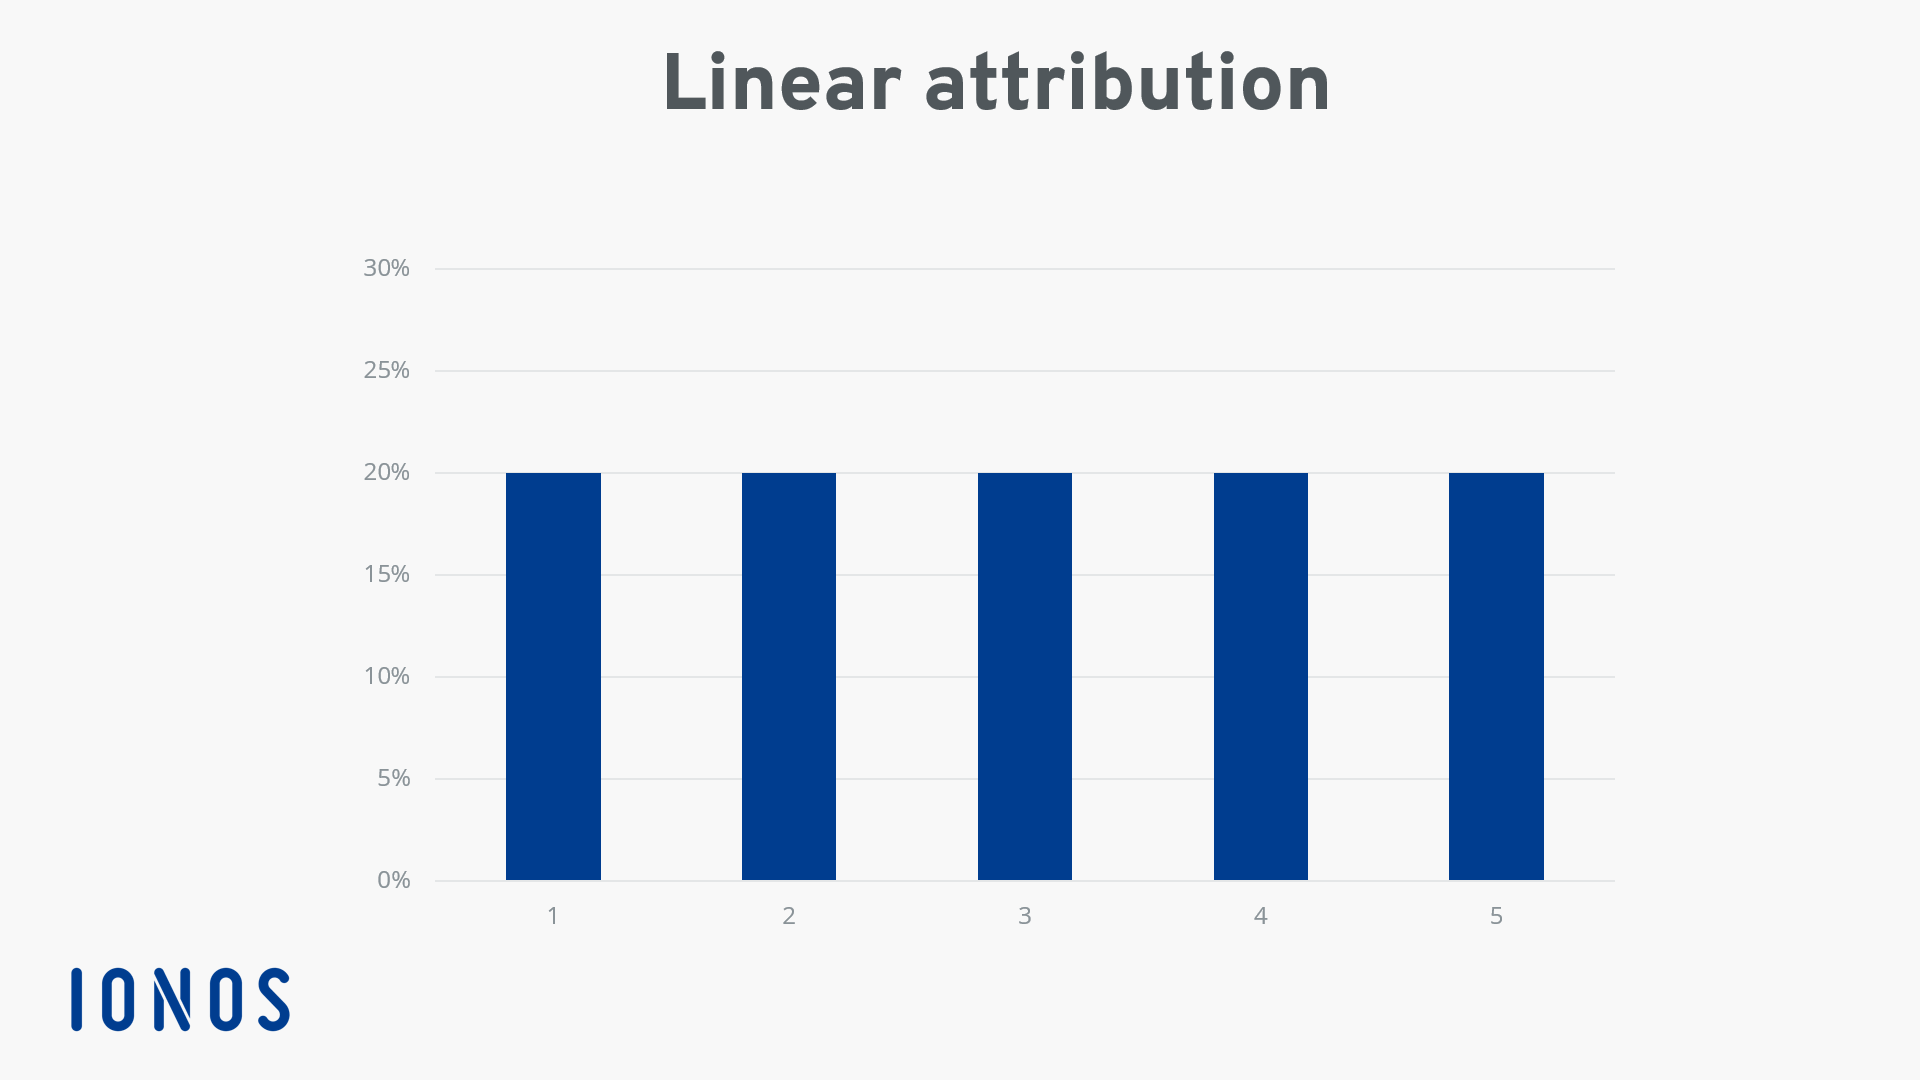 Linear attribution